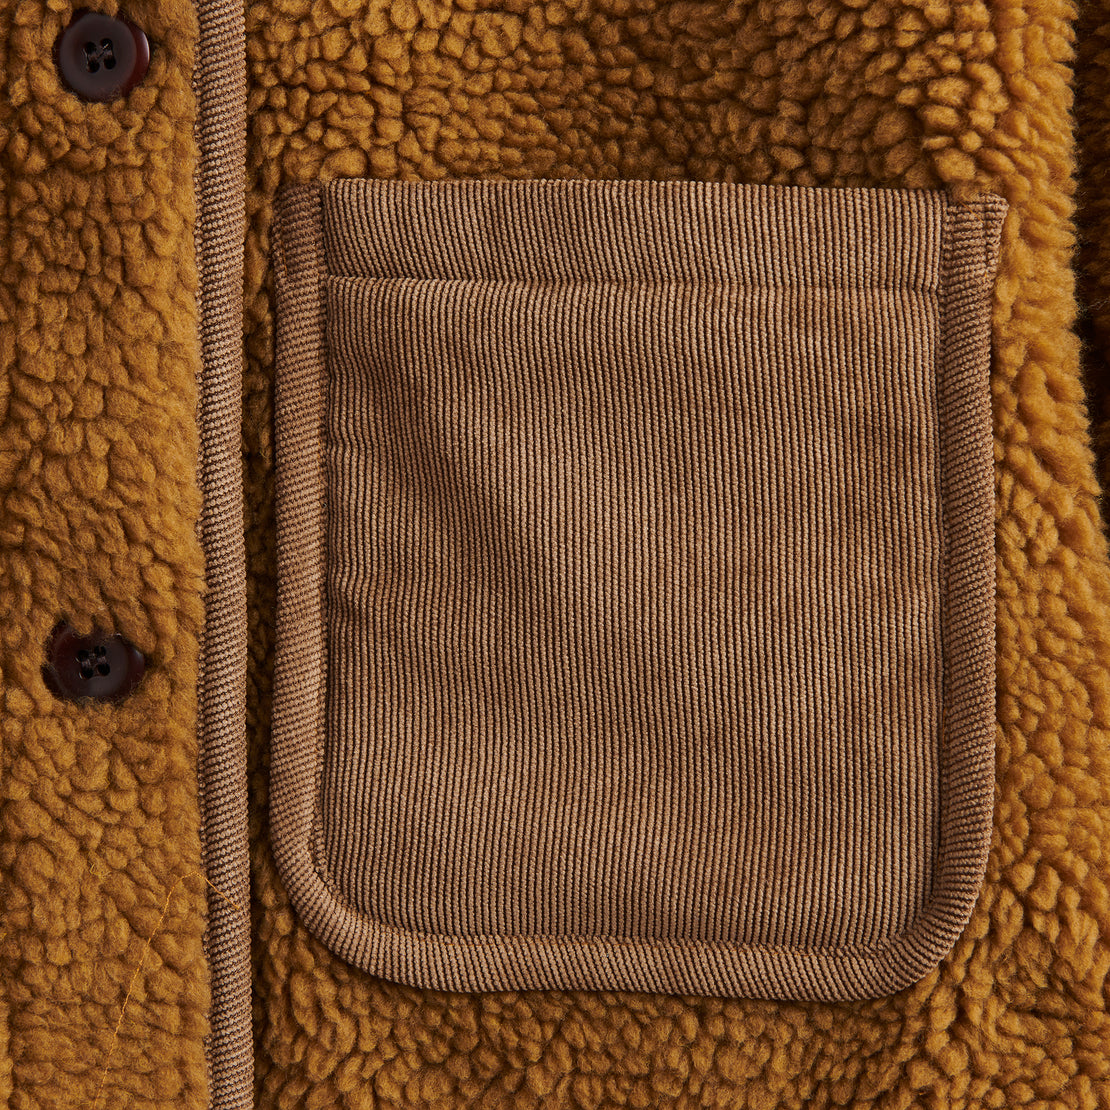 Sherpa Fleece Jacket - Golden Khaki